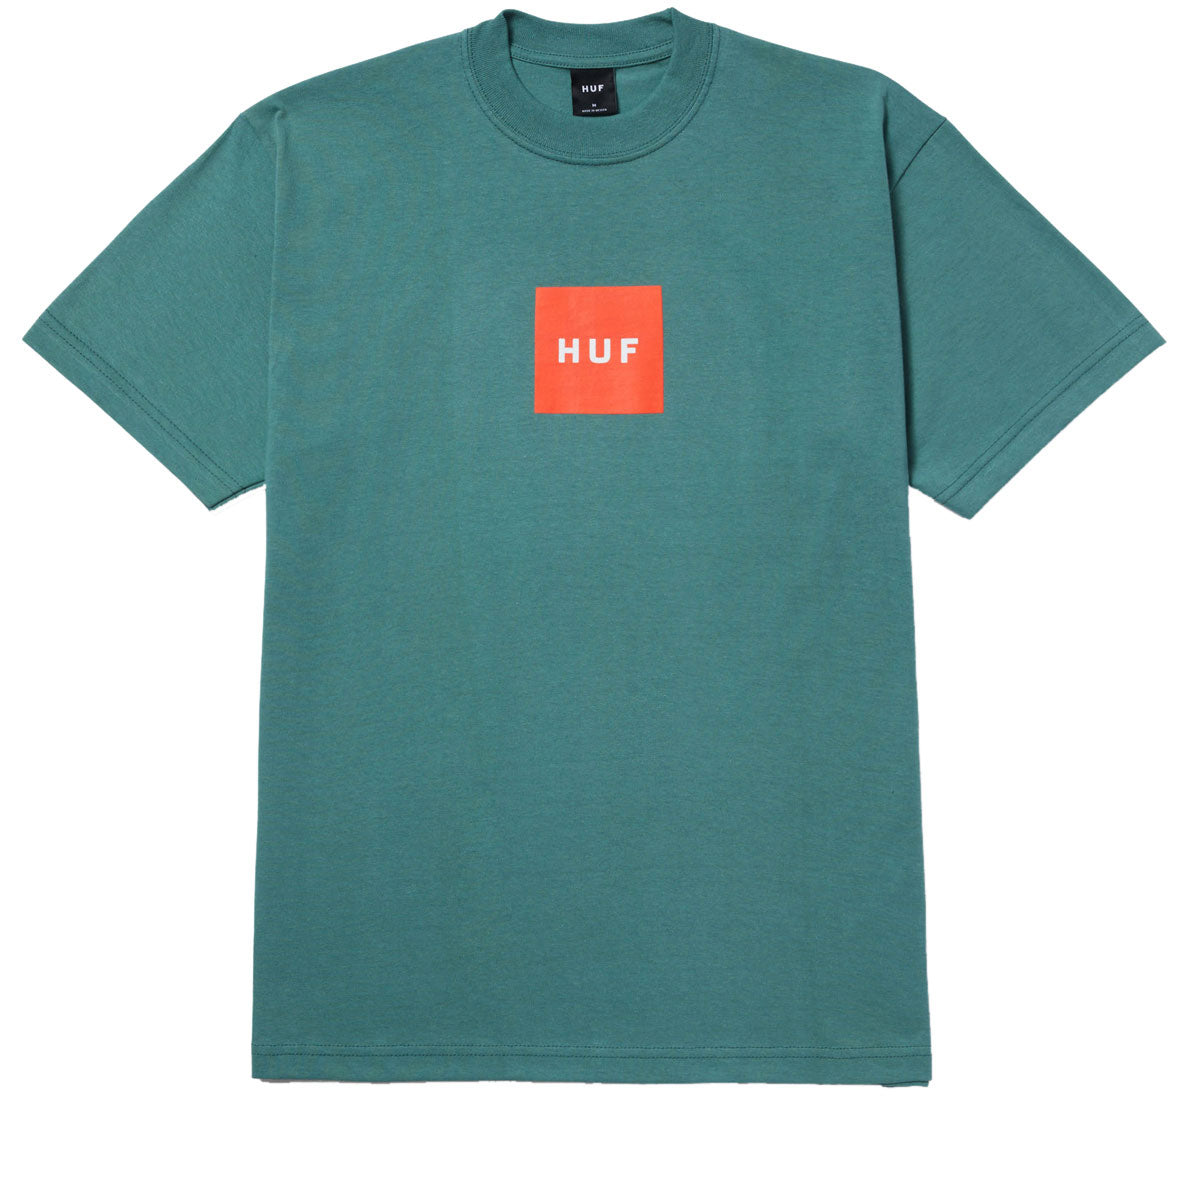 Huf Set Box T-Shirt - Sage image 1